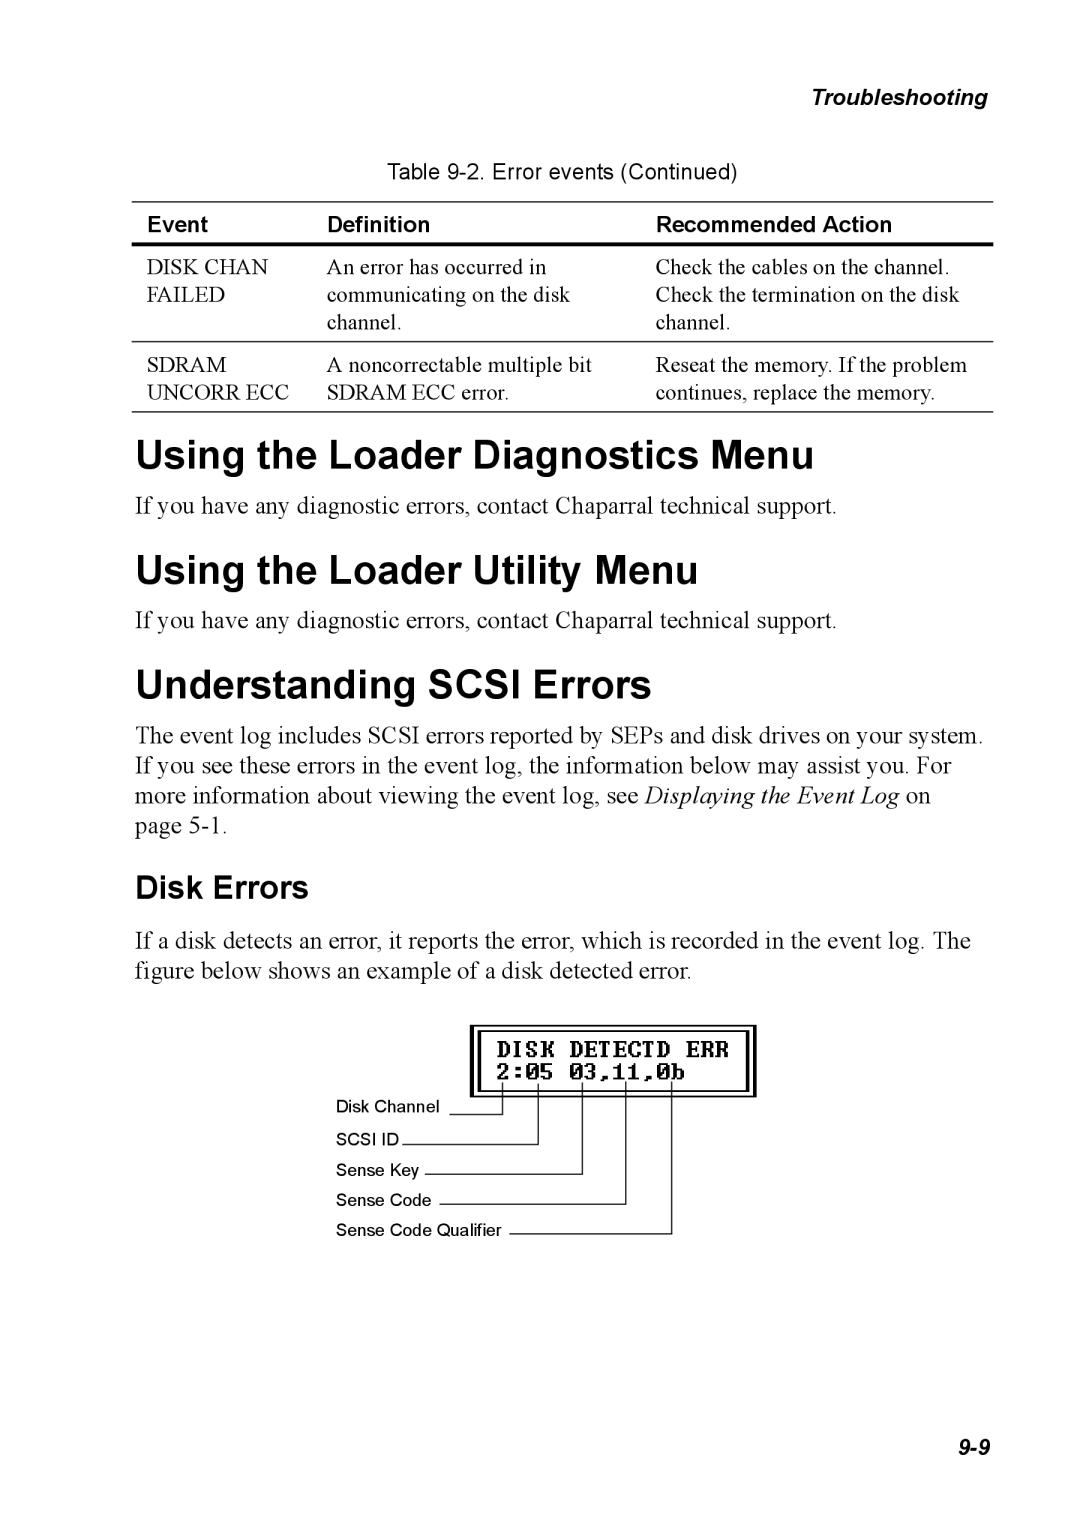 Chaparral G5312/G7313 manual Using the Loader Diagnostics Menu, Using the Loader Utility Menu, Understanding Scsi Errors 